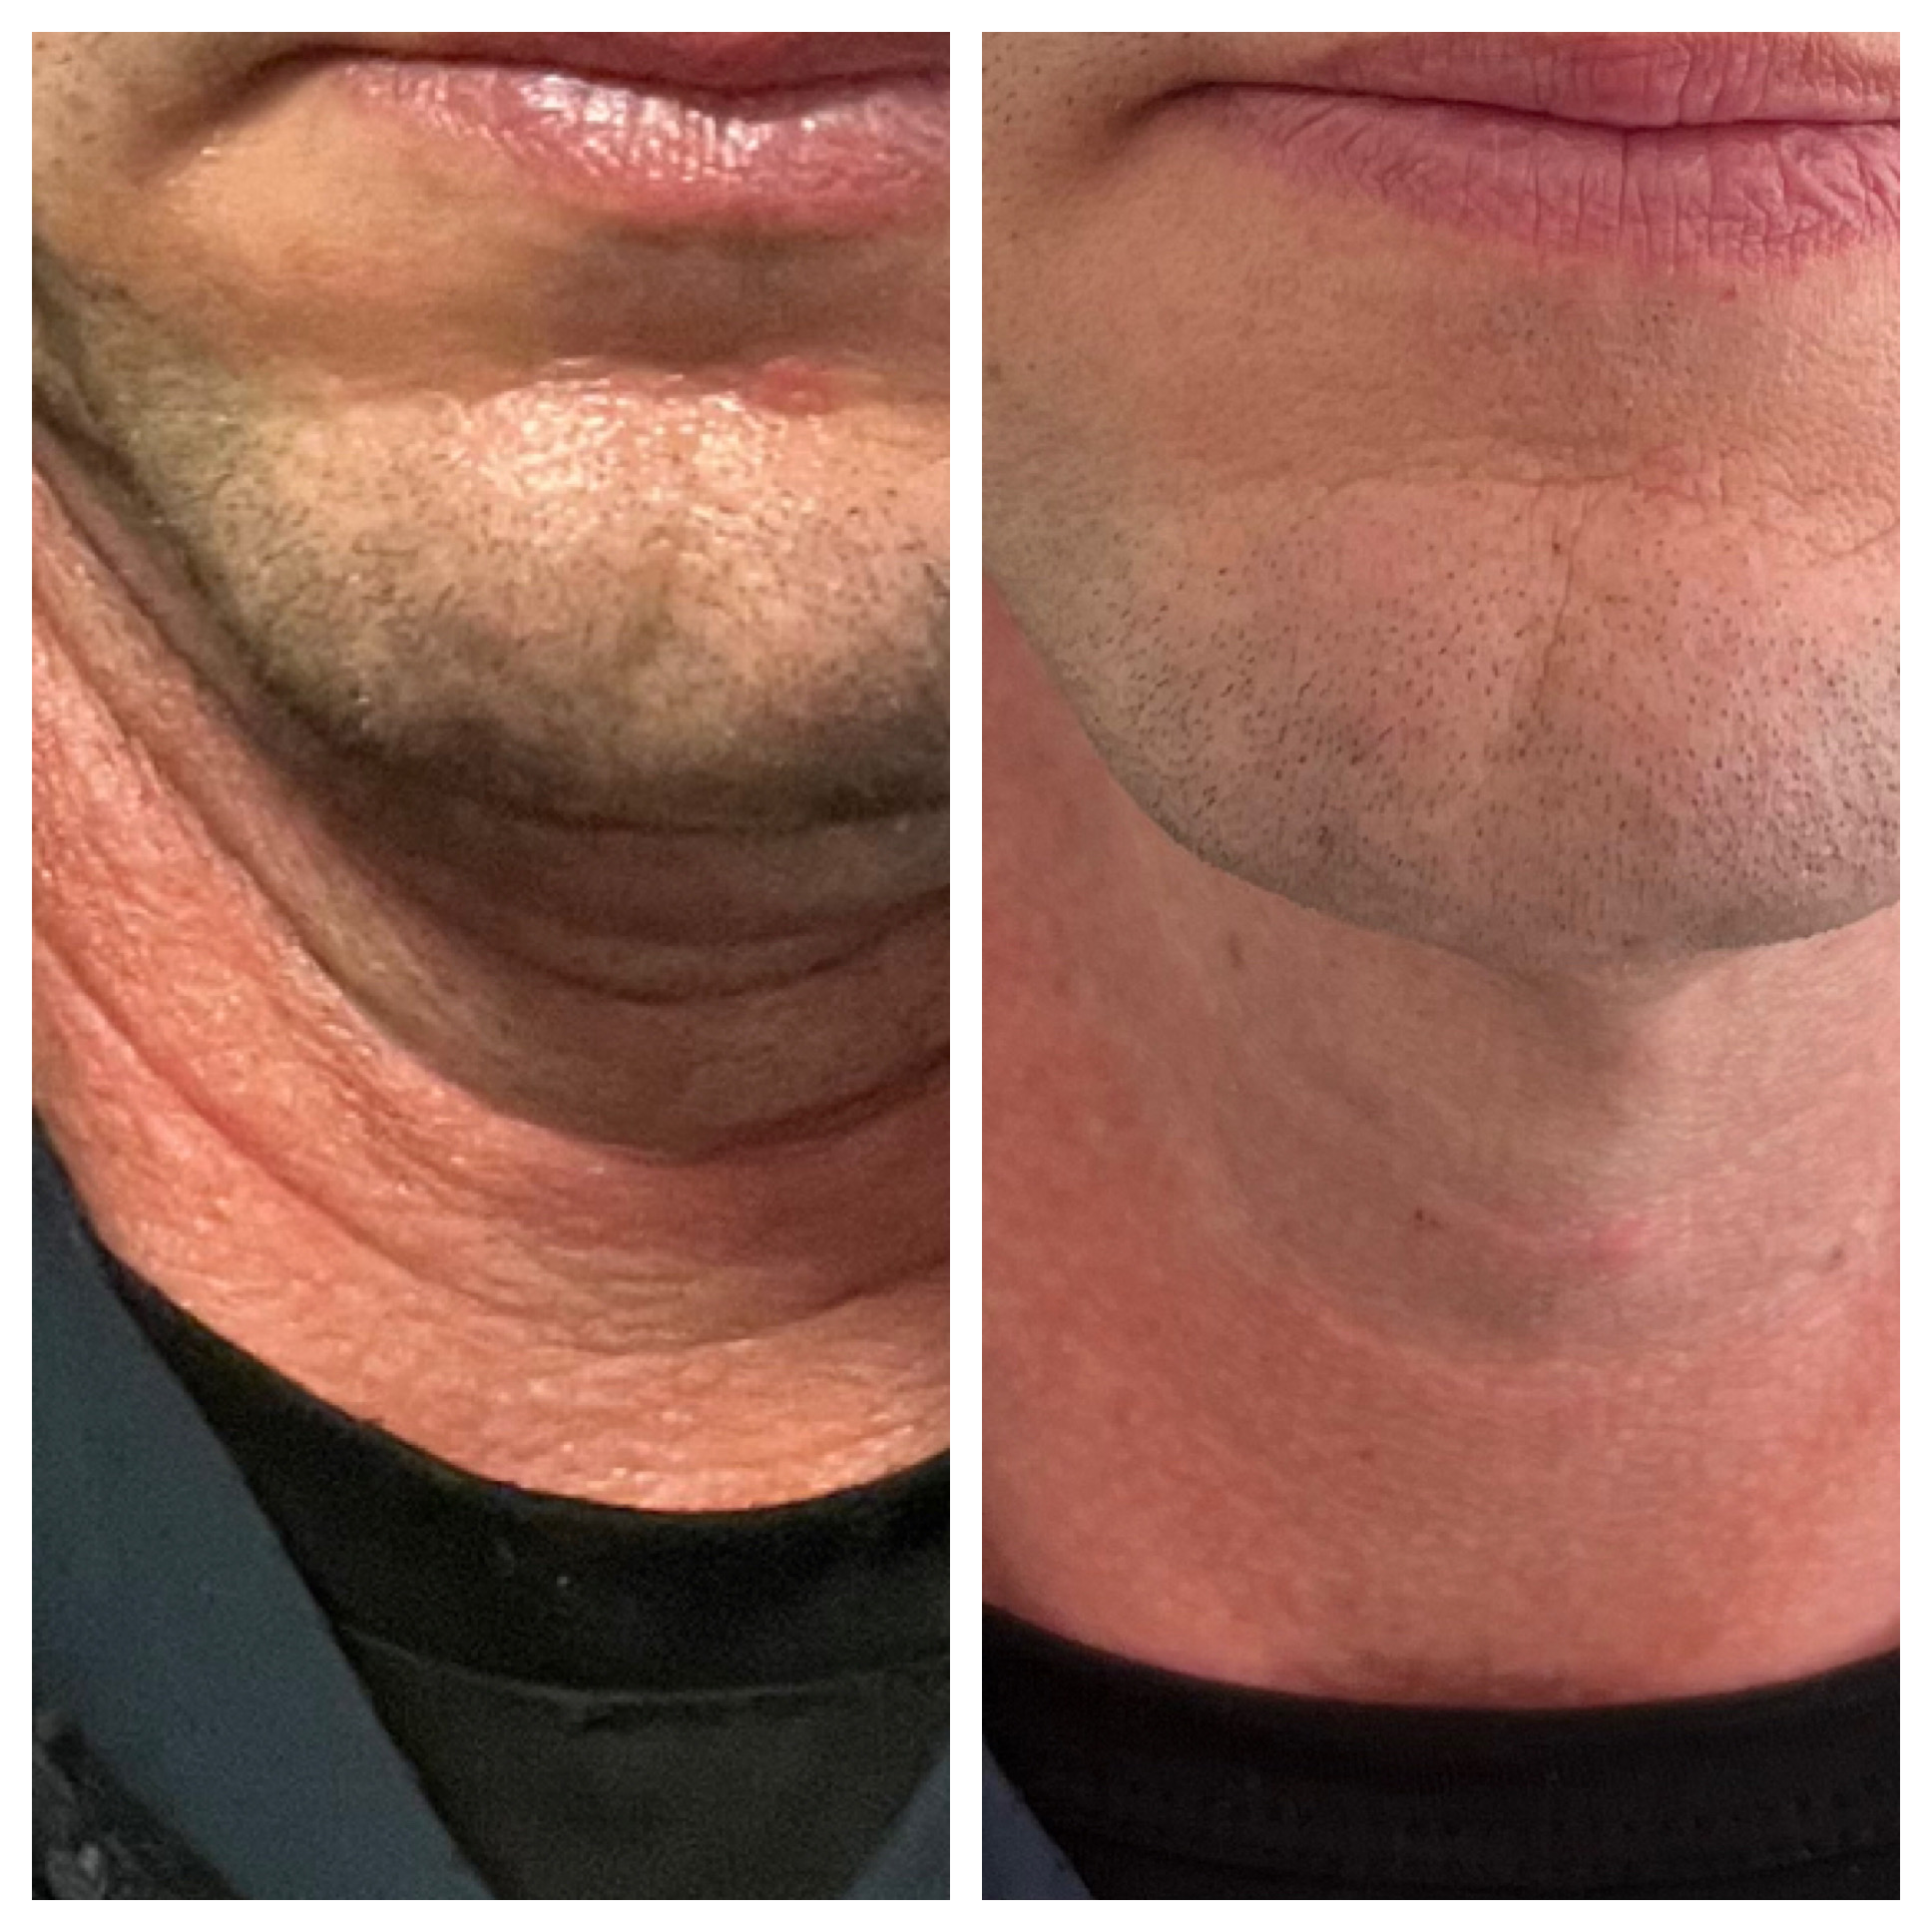 NeoGen Plasma-Skin Regeneration before & after treatment photos in Leominster, MA | Opulent Aesthetics and Wellness